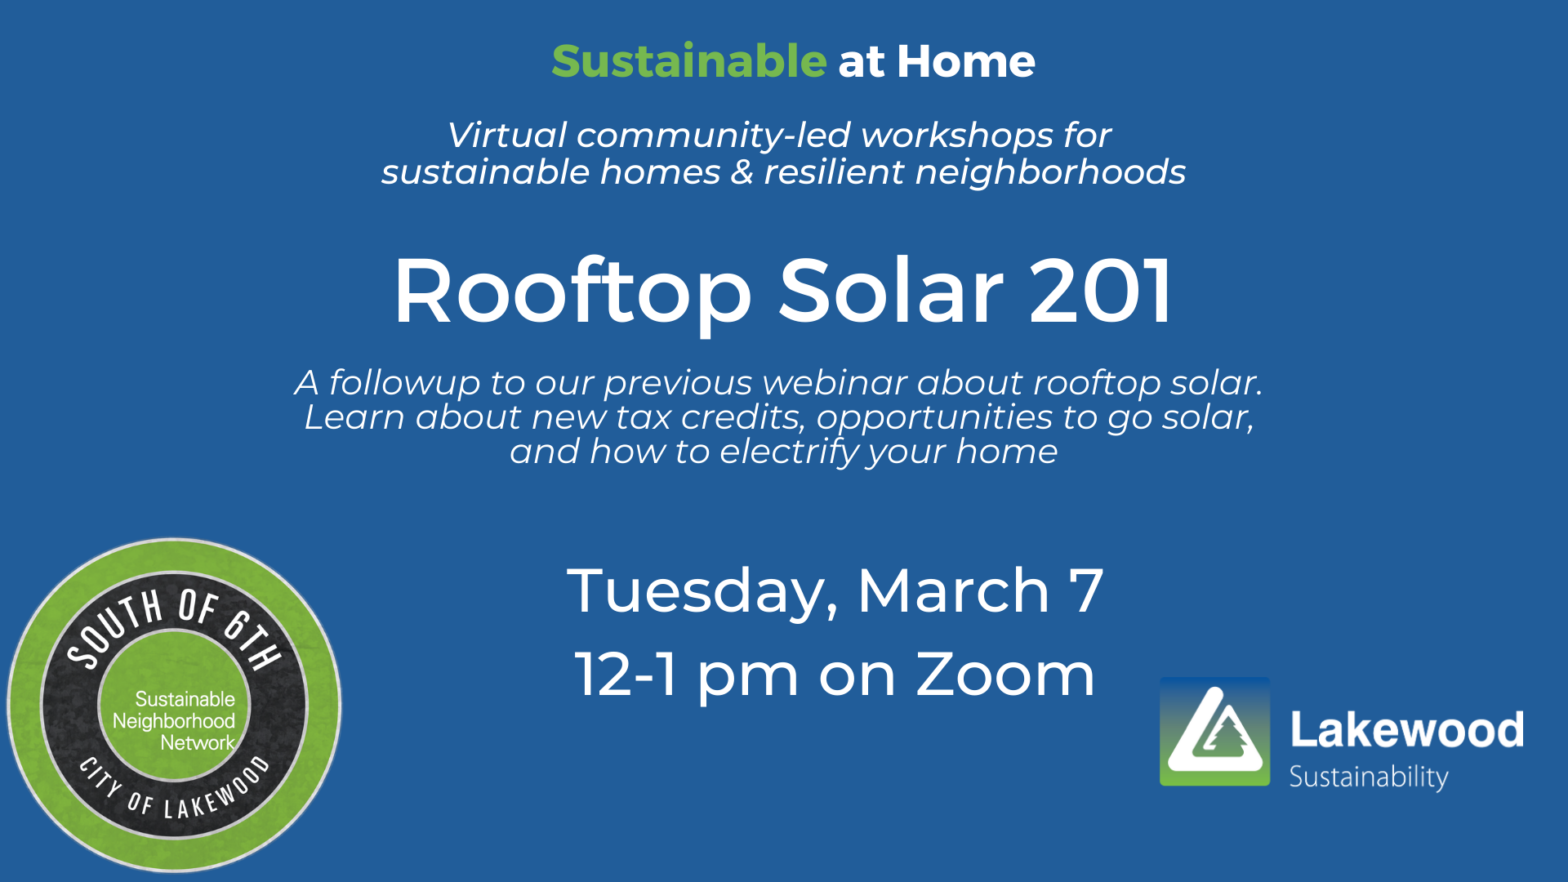 Rooftop Solar 201